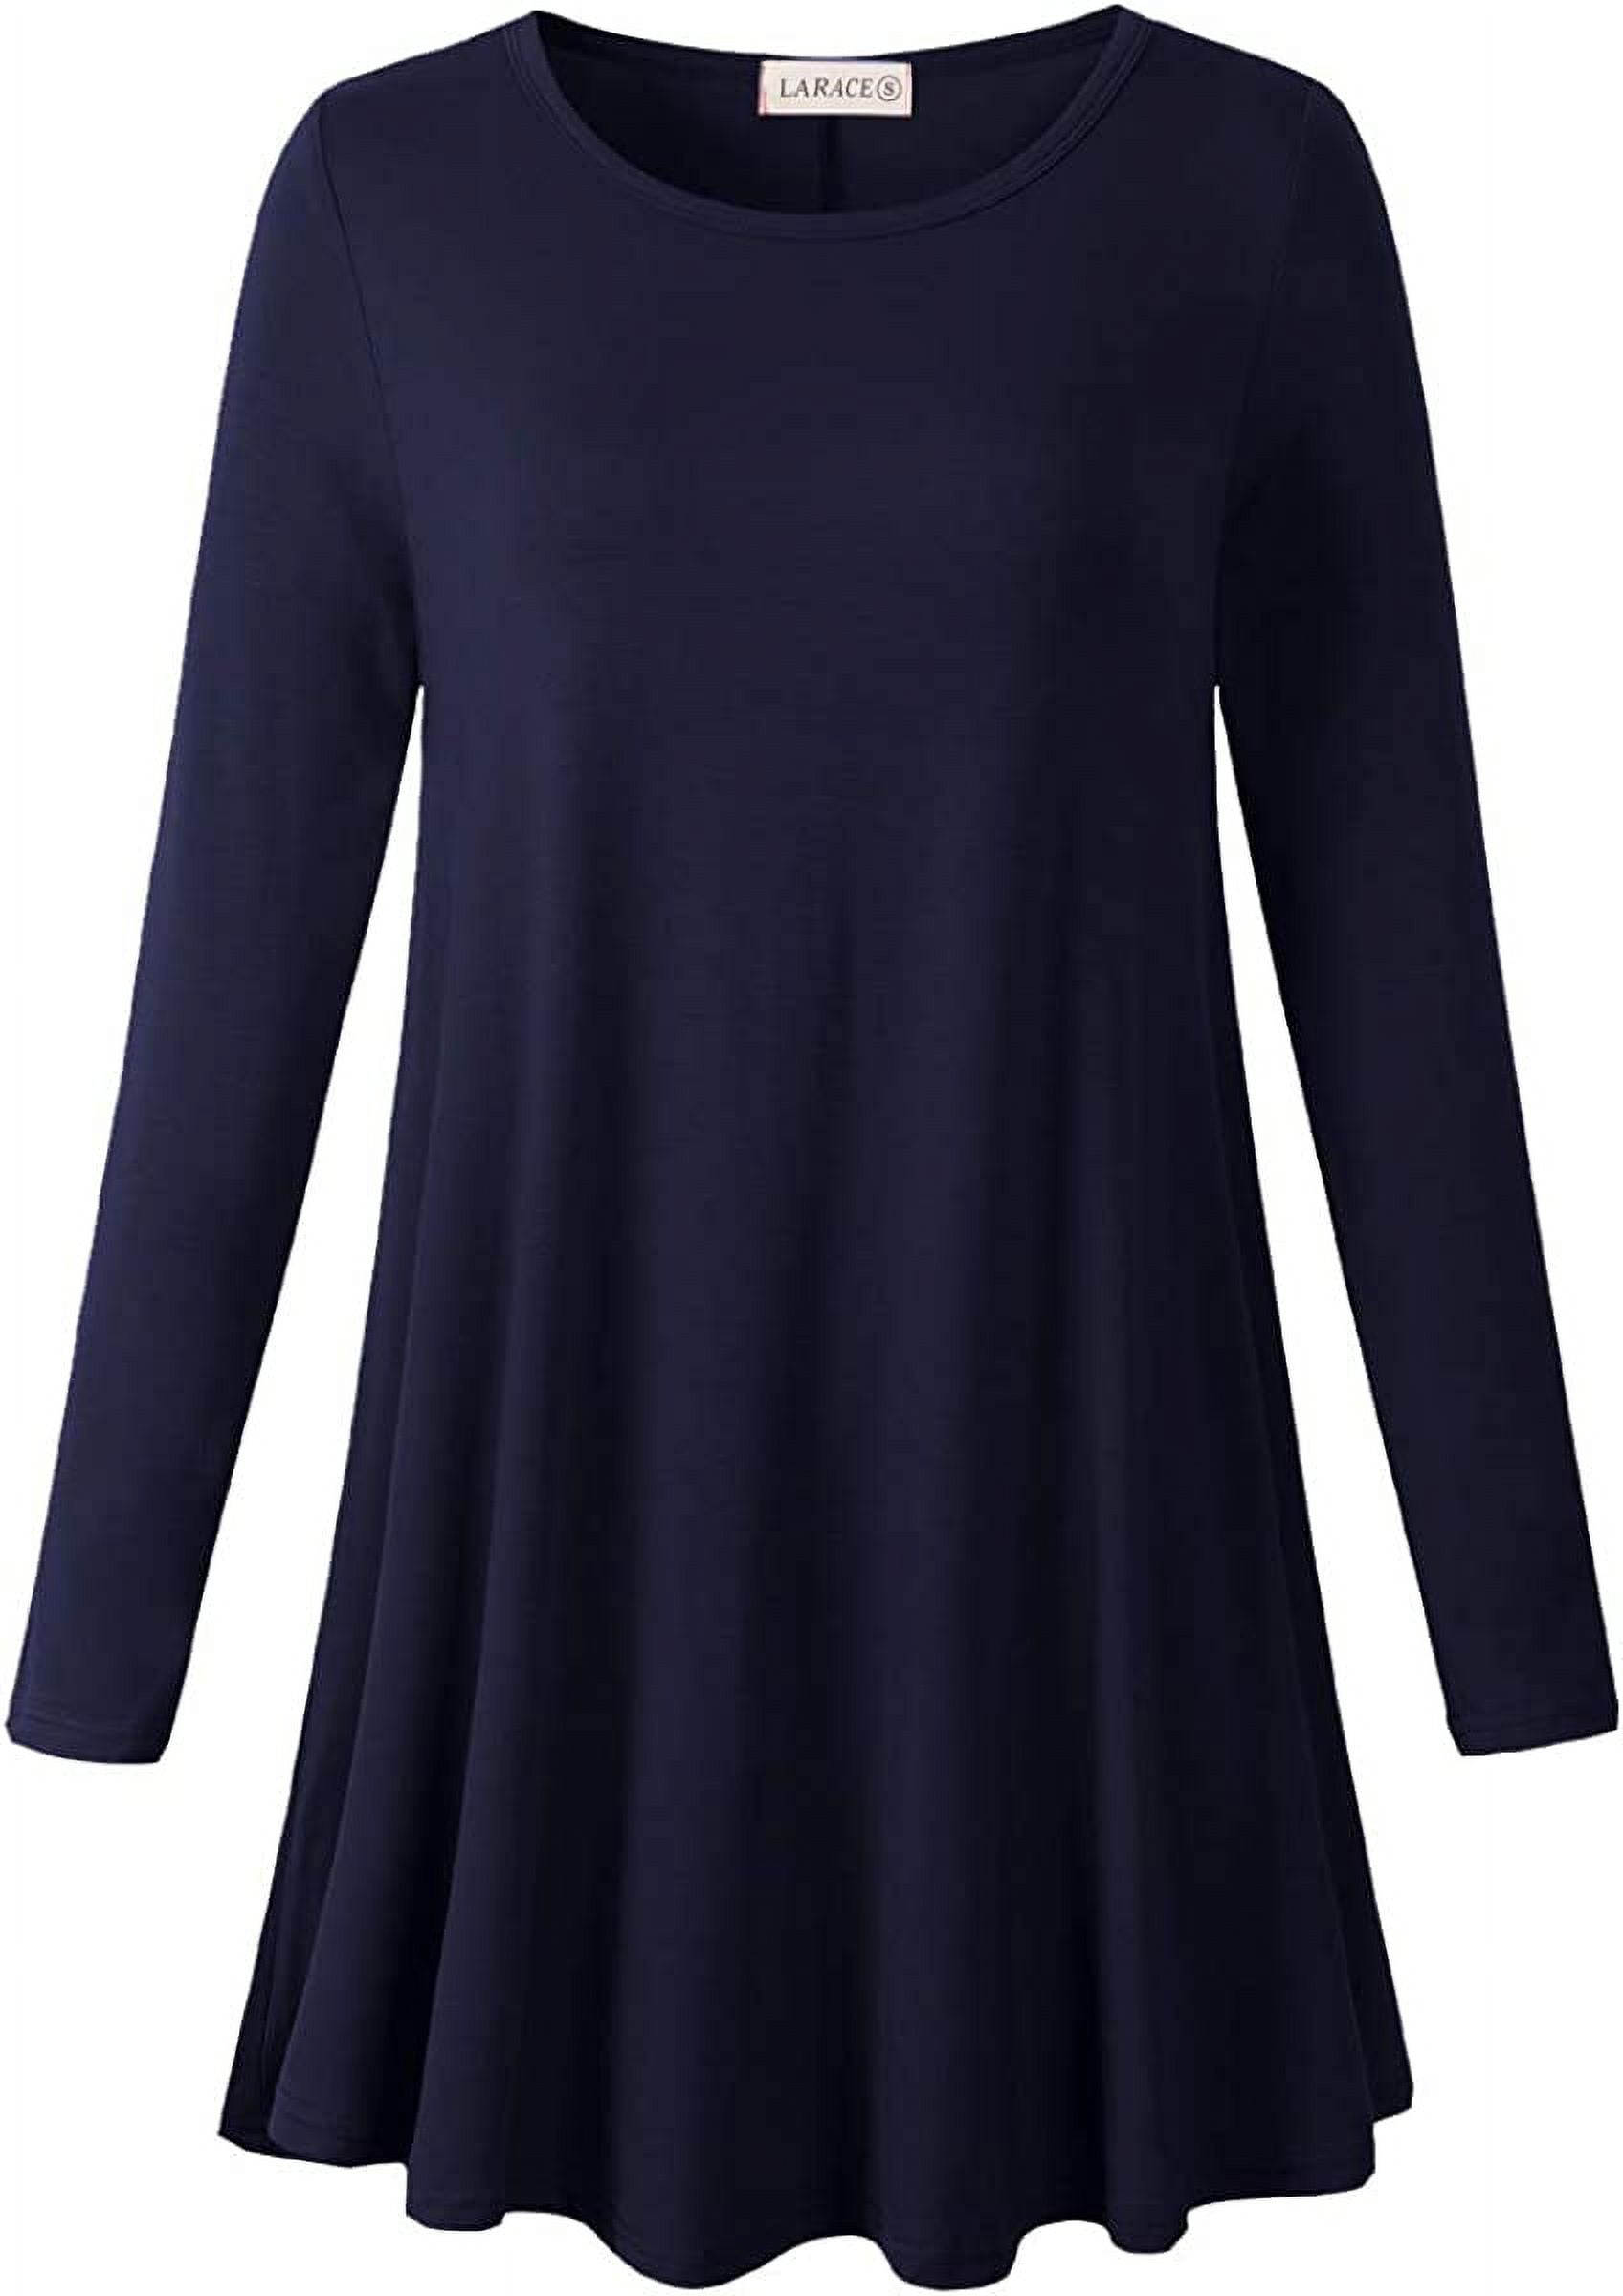 LARACE Plus Size Tunic Tops Long Sleeve Shirts for Women Swing